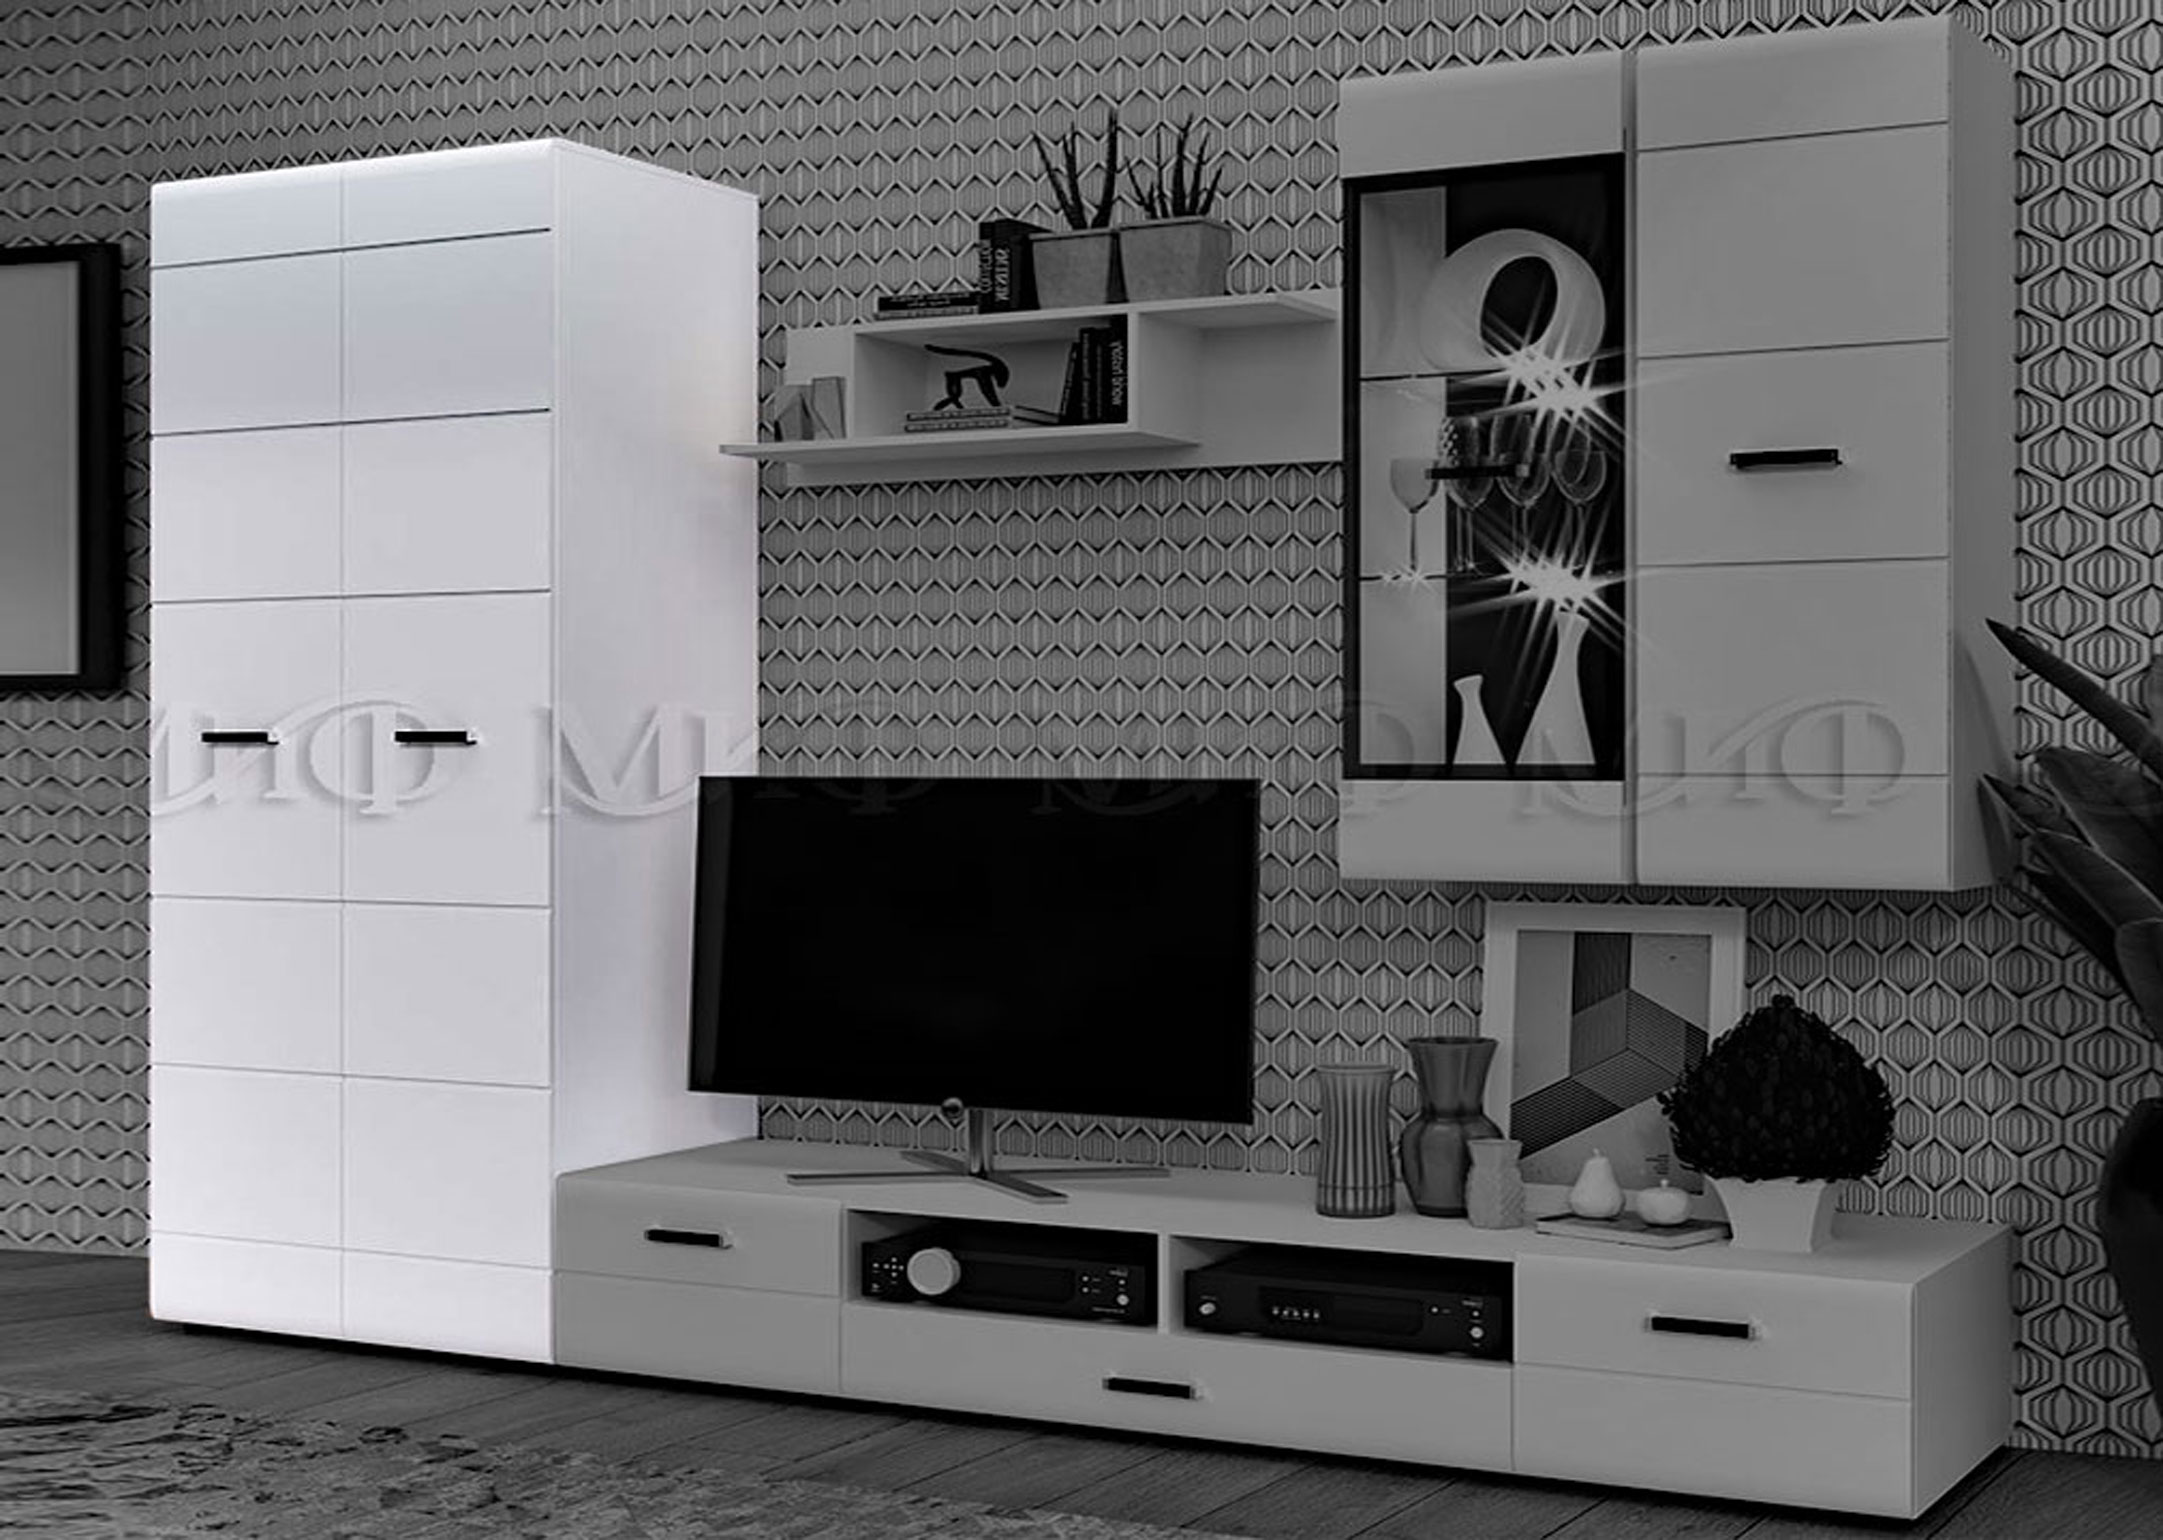 Шкаф 2-х створчатый "Нэнси New" от магазина мебели МегаХод.РФ